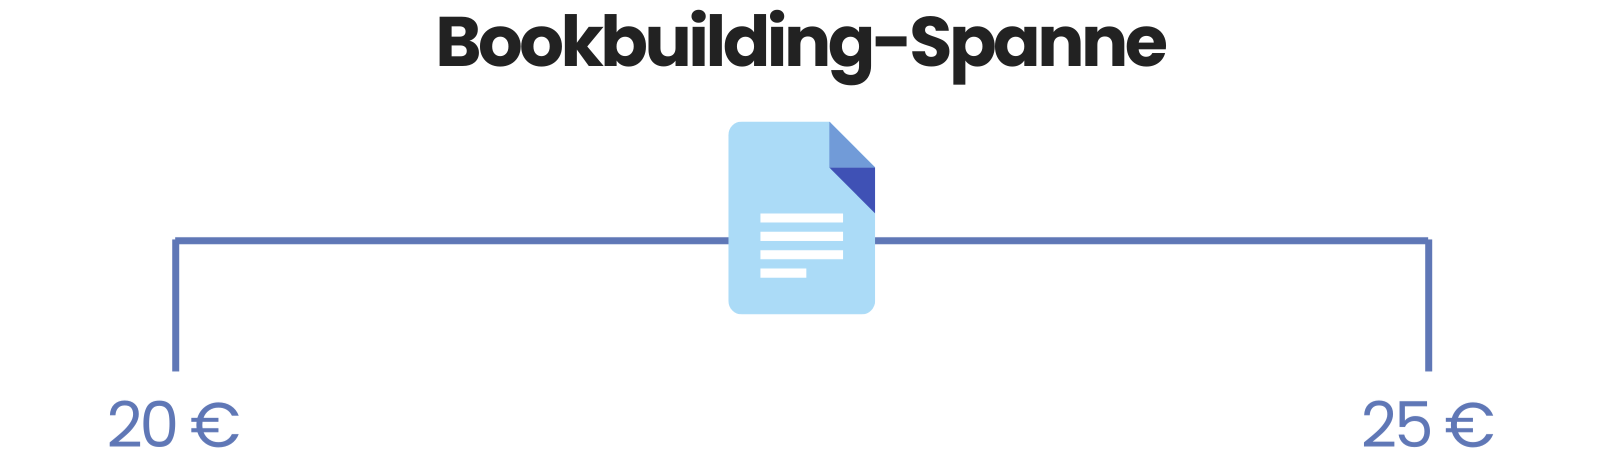 Bookbuilding-Spanne